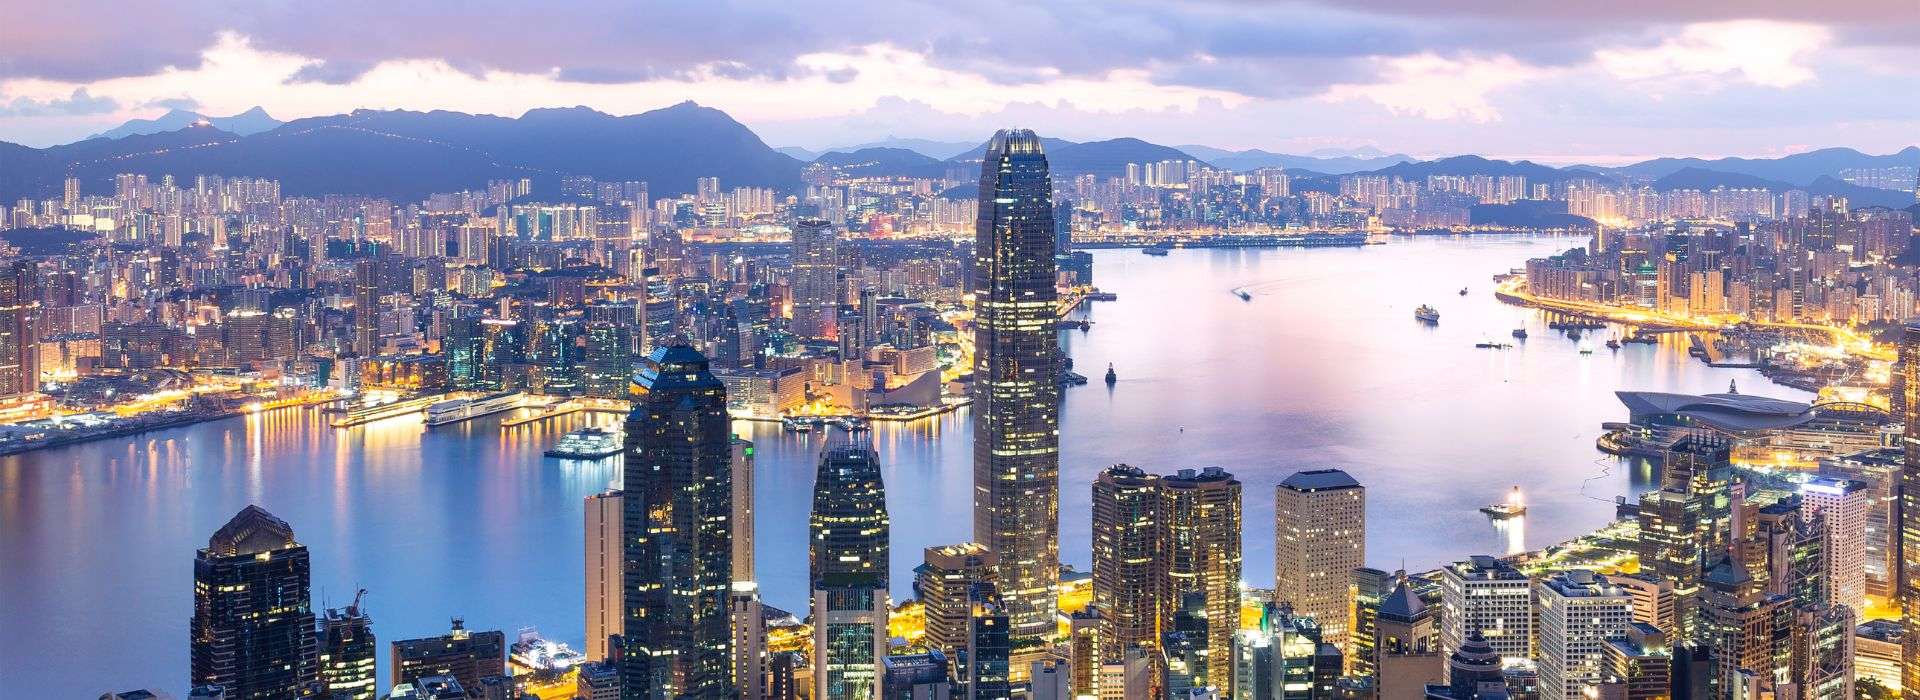 Hongkong Macau Delight Tour Packages